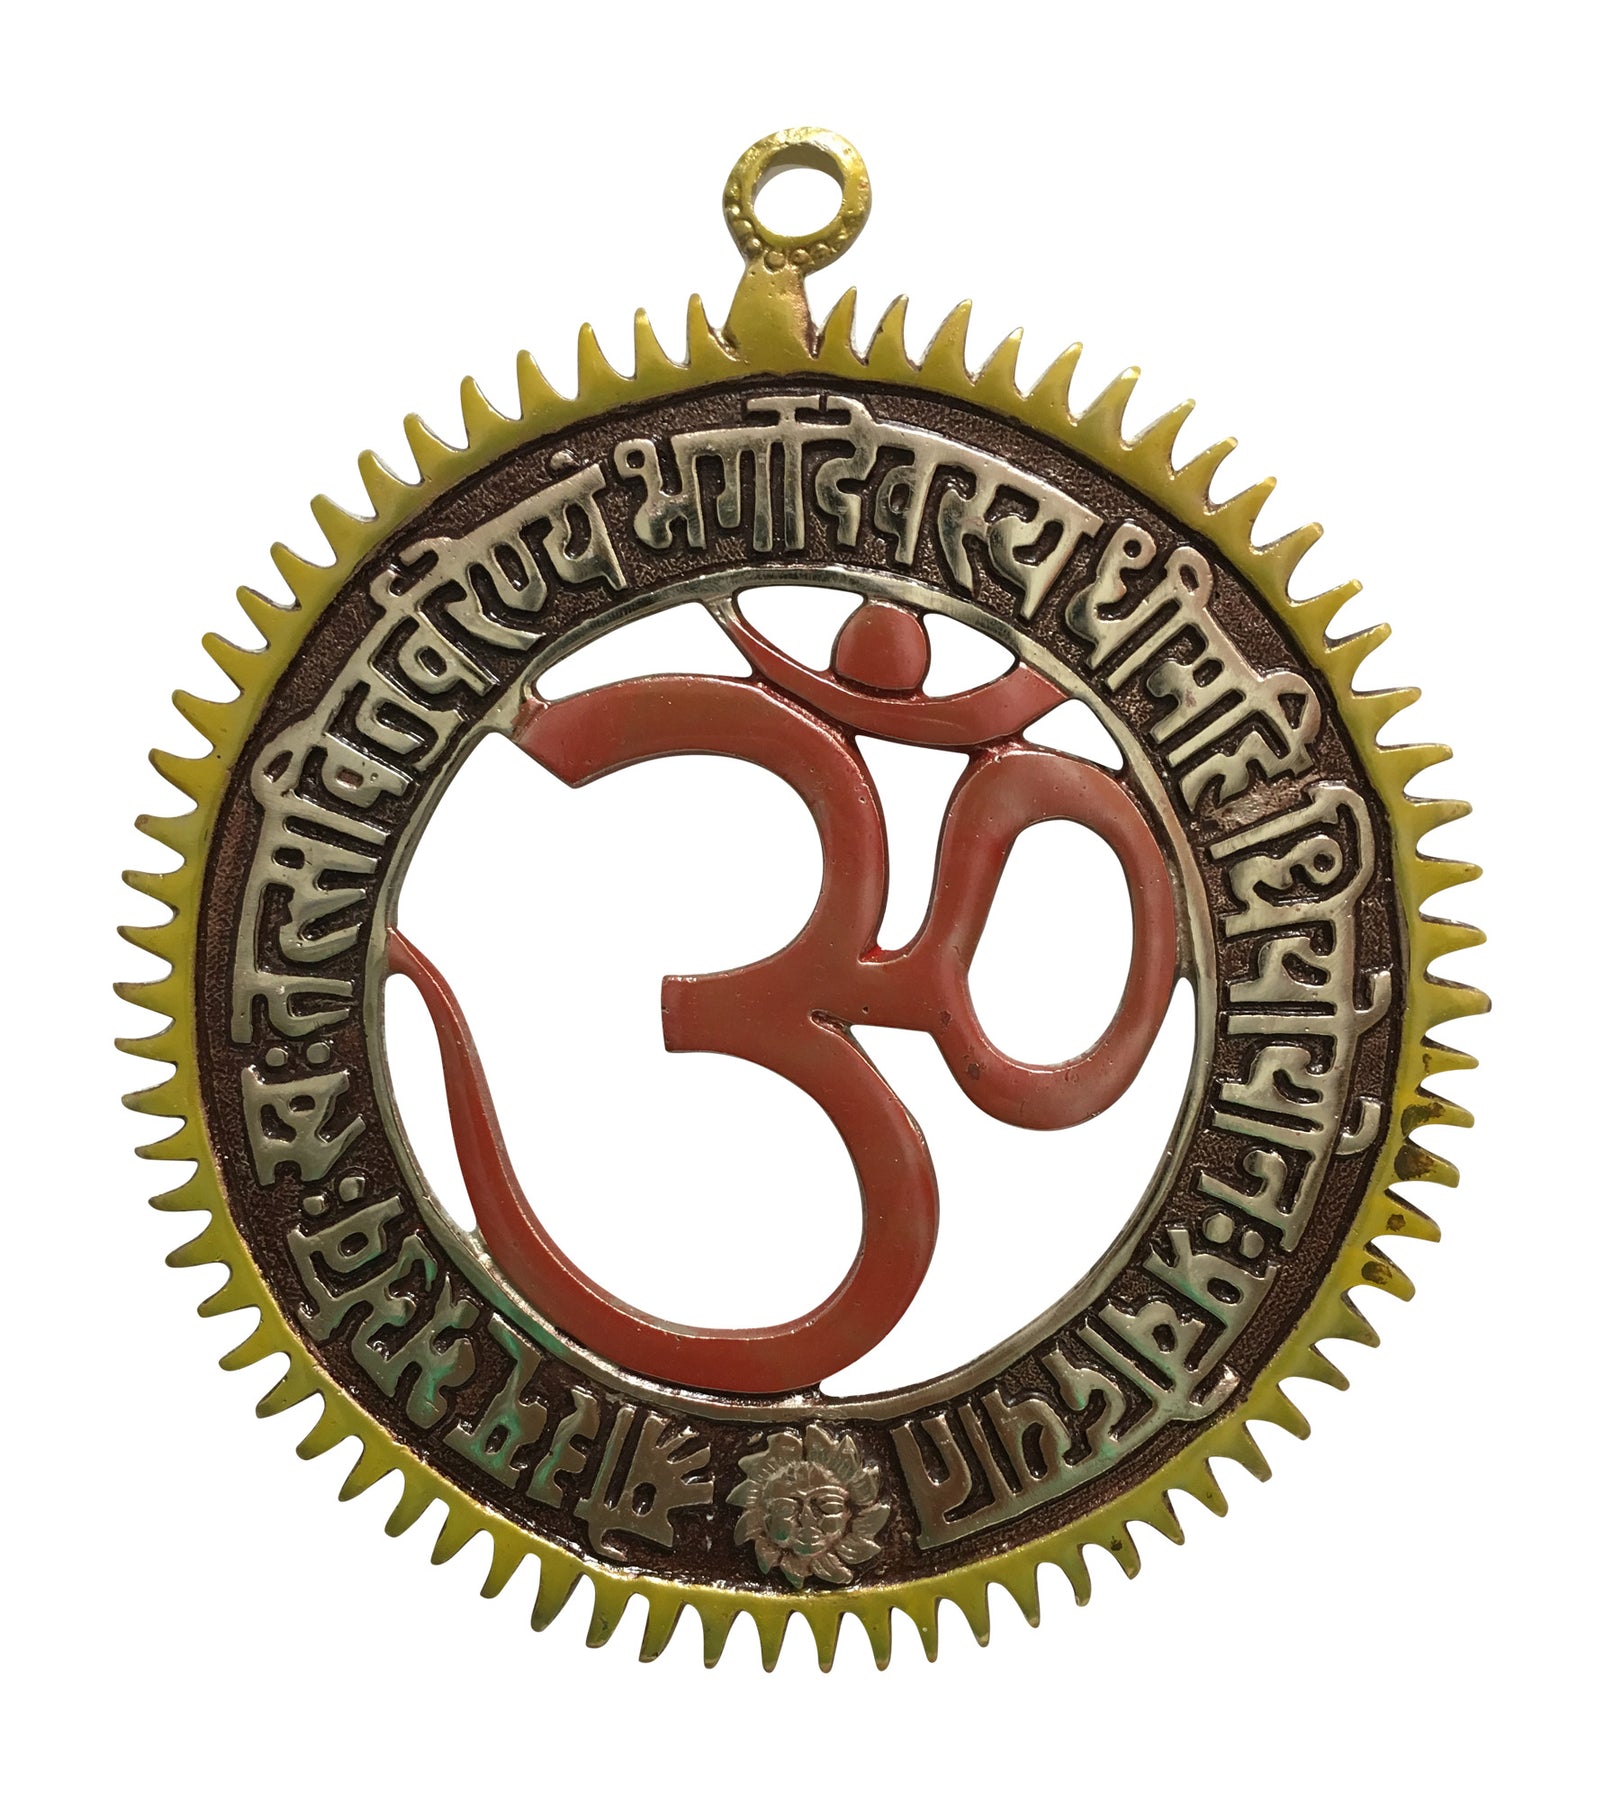 gayatri mantra symbol